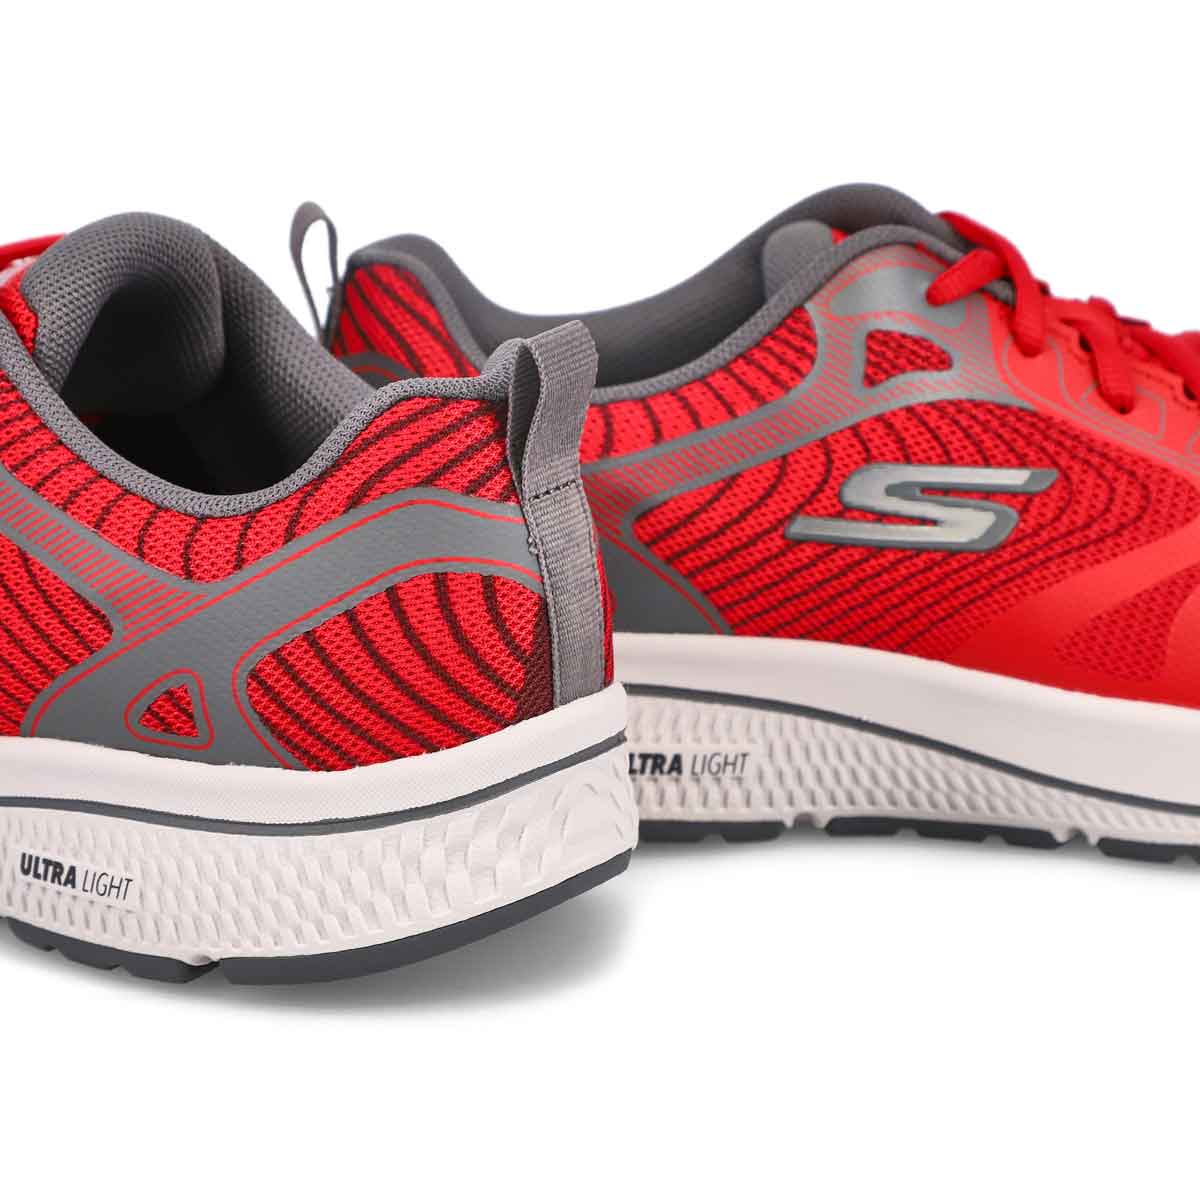 Men's Go Run Sneaker - Red